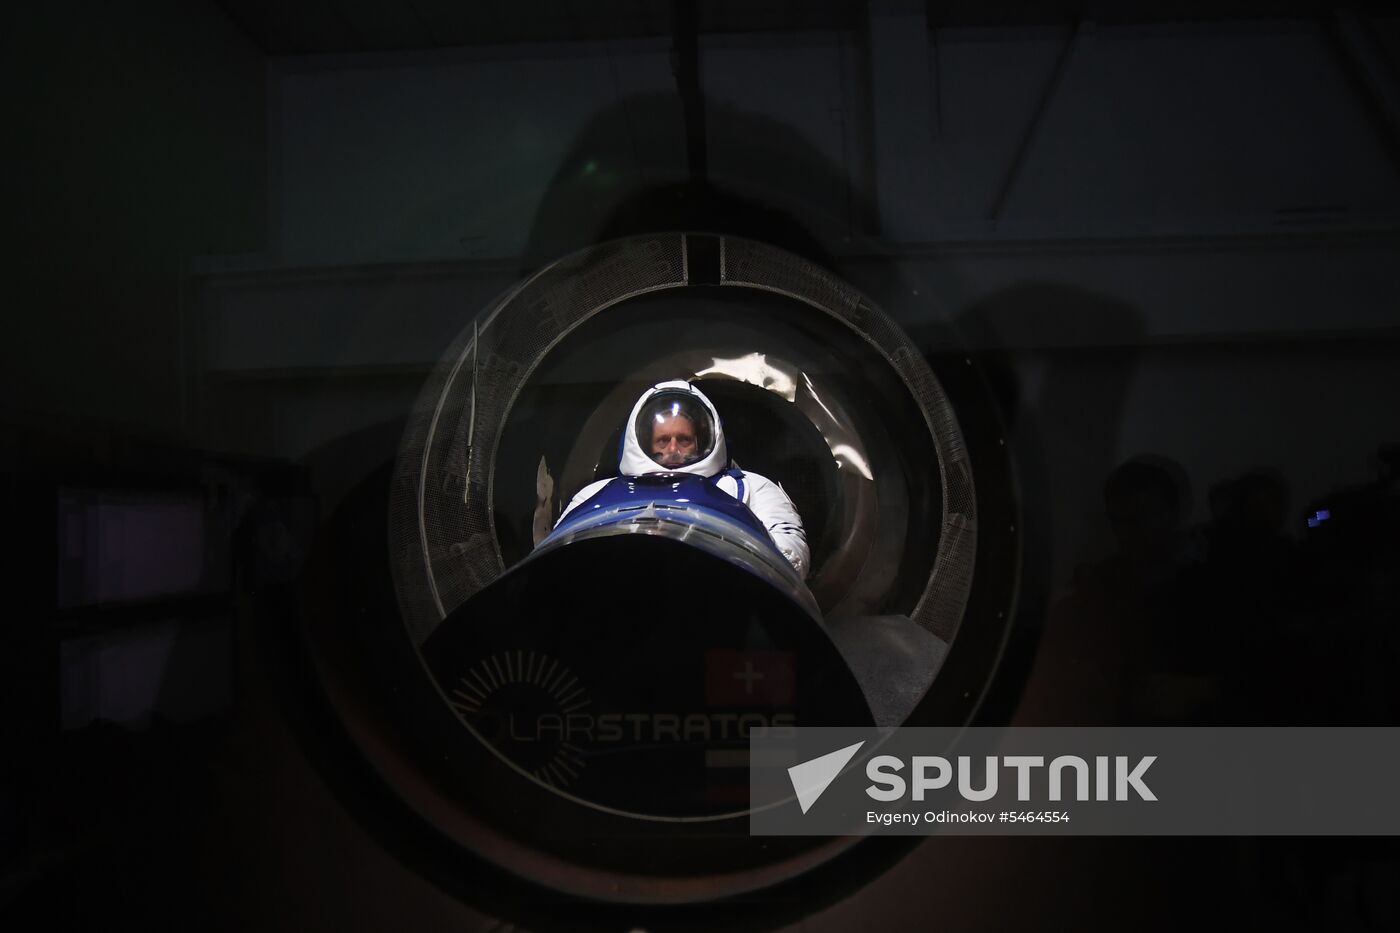 Vacuum chamber testing of spacesuit